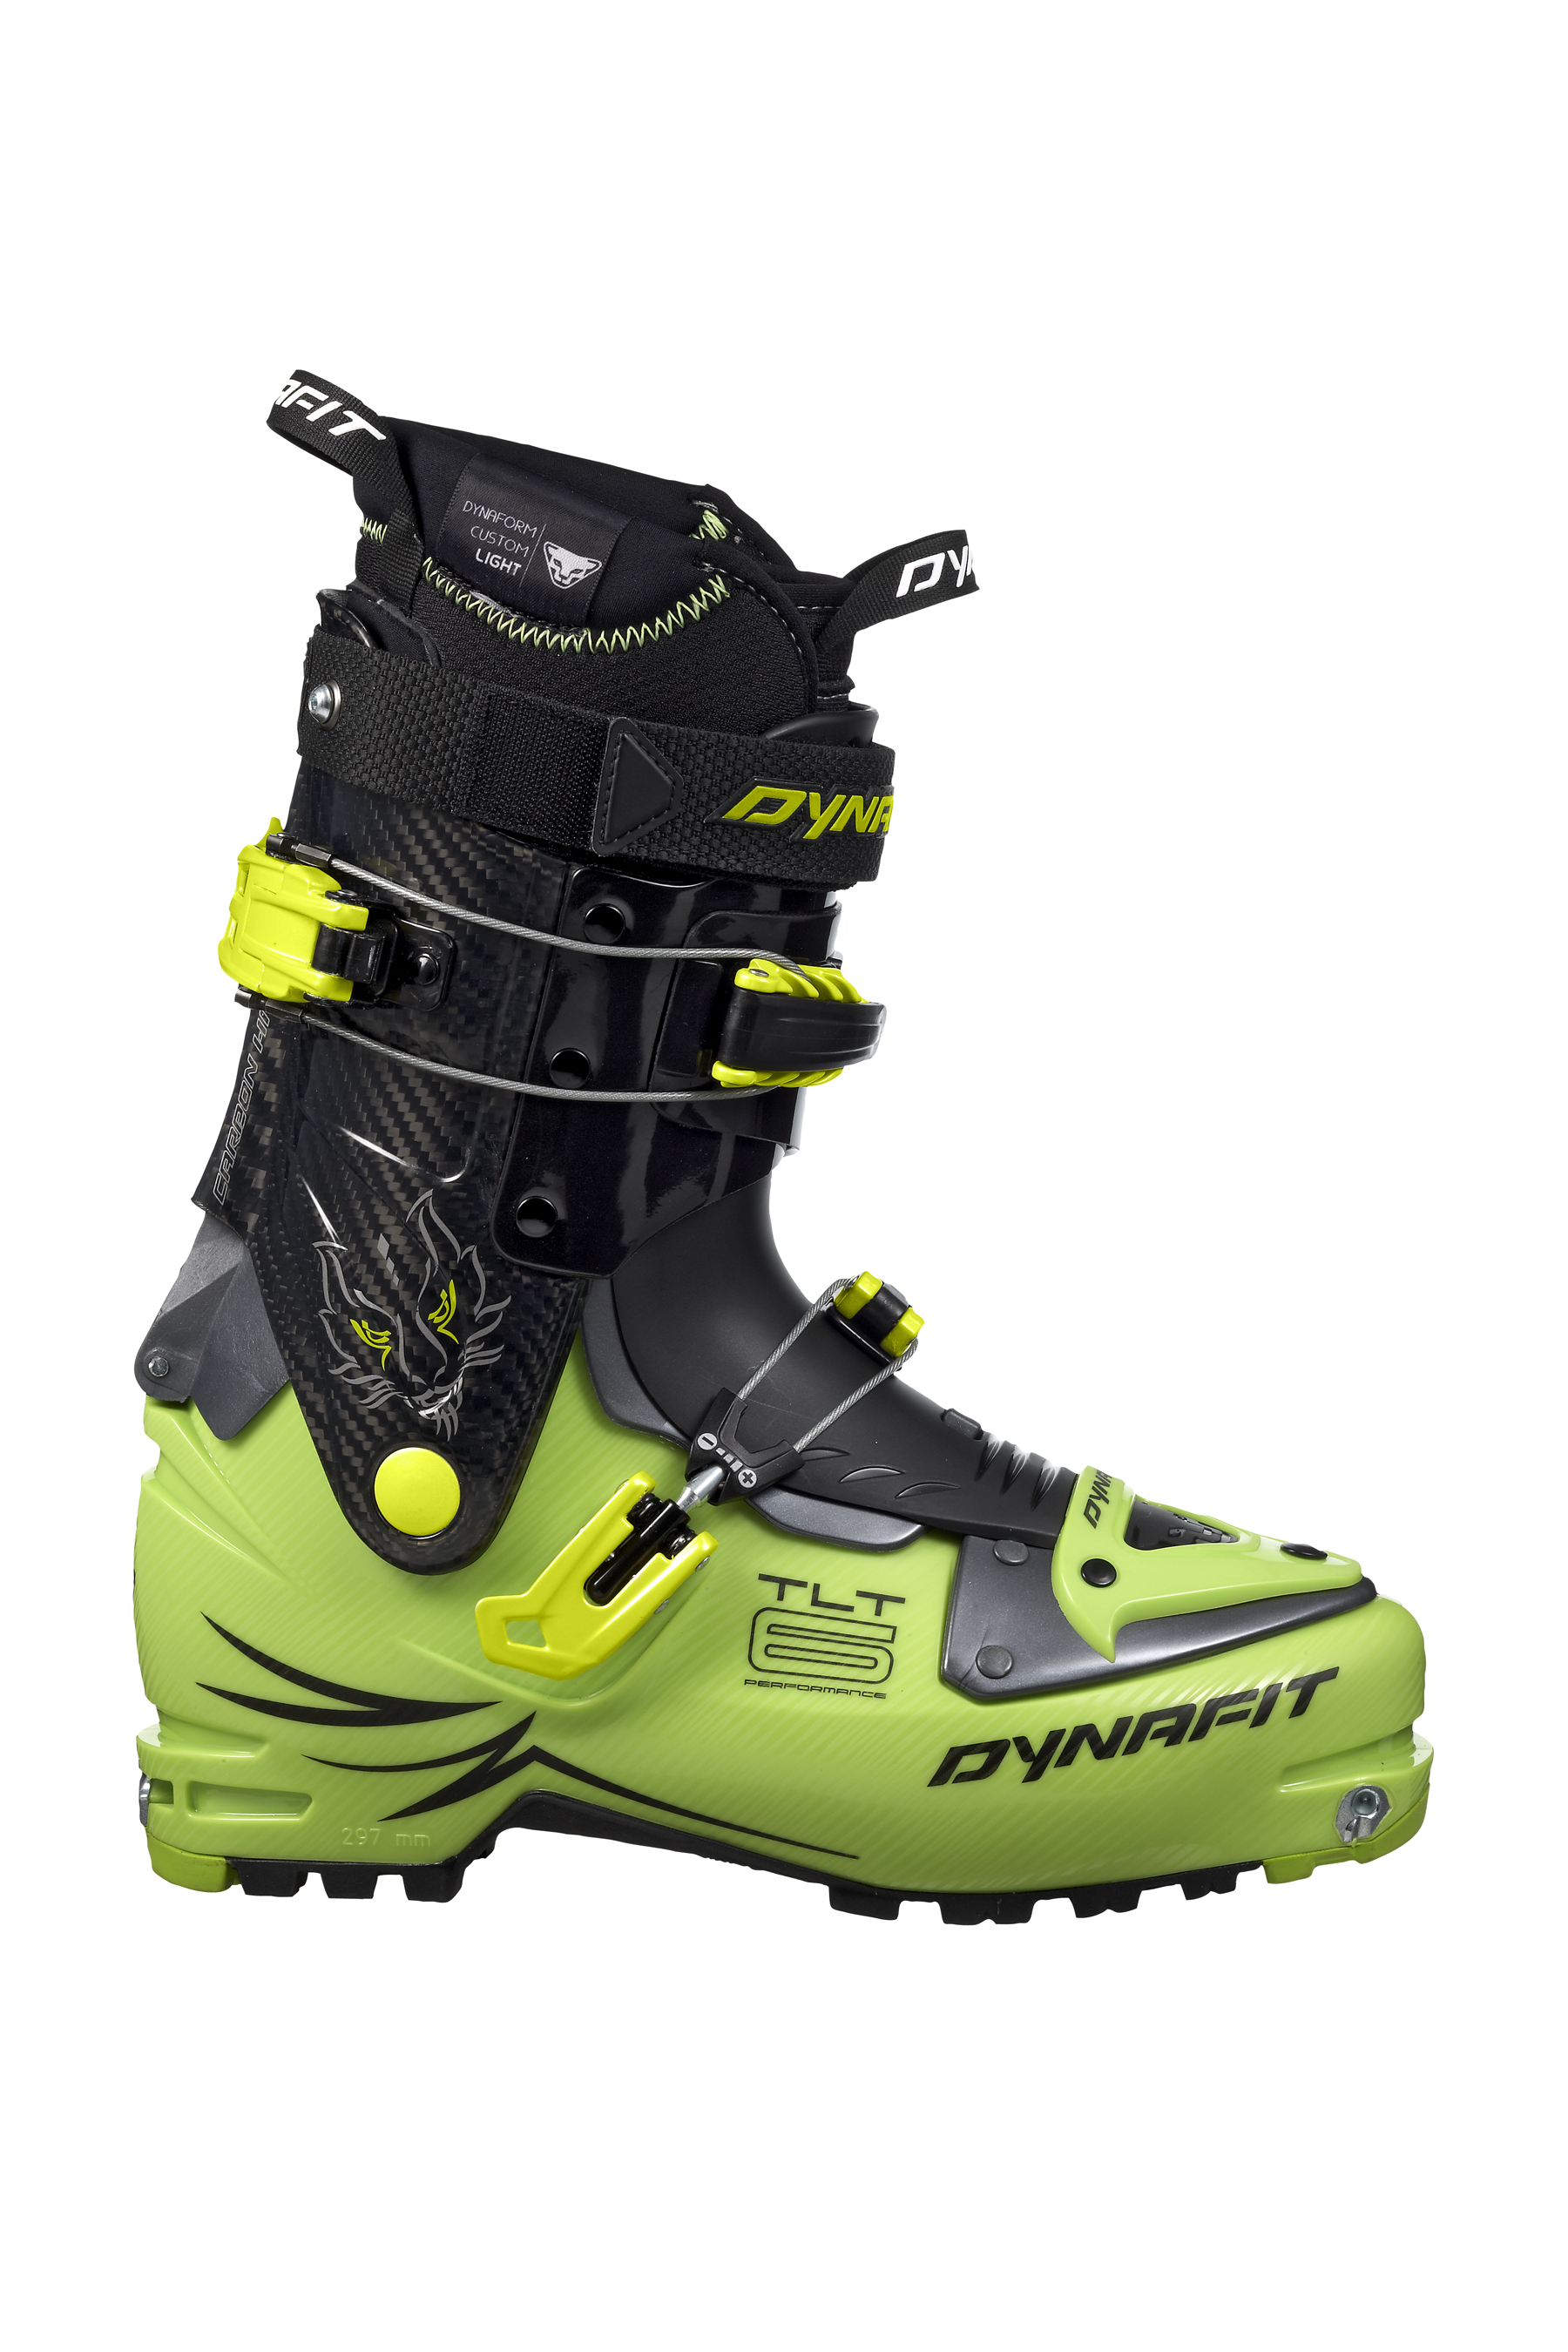 Adattaore per Dynafit Tlt 5 Tlt 6 attacchi Kingpin TLT Heel Adapter ski bindings